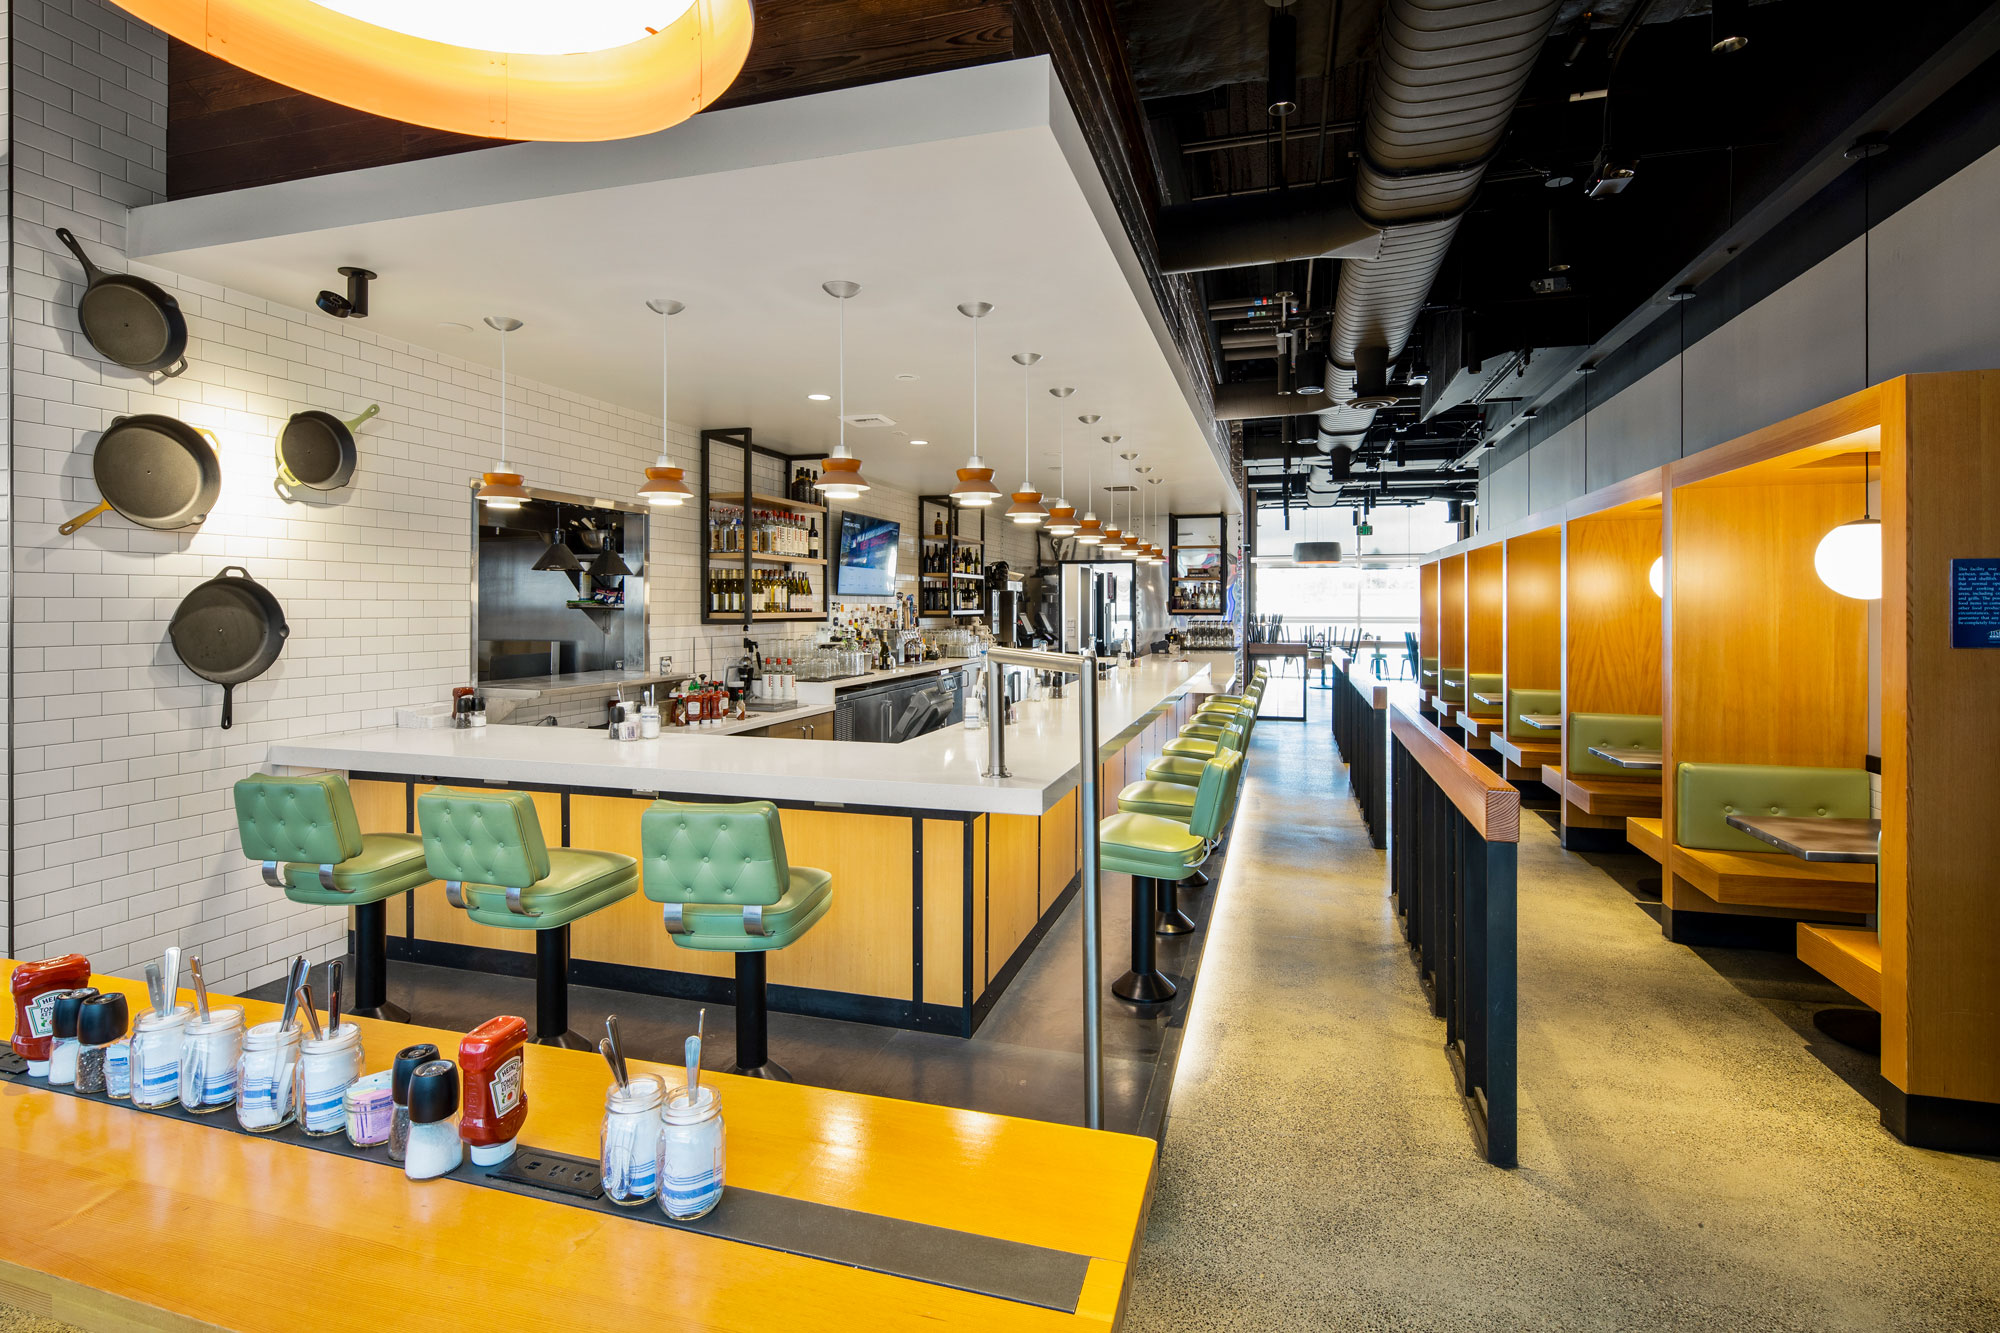 SEA Skillet Interior Restaurant and Bar Seating